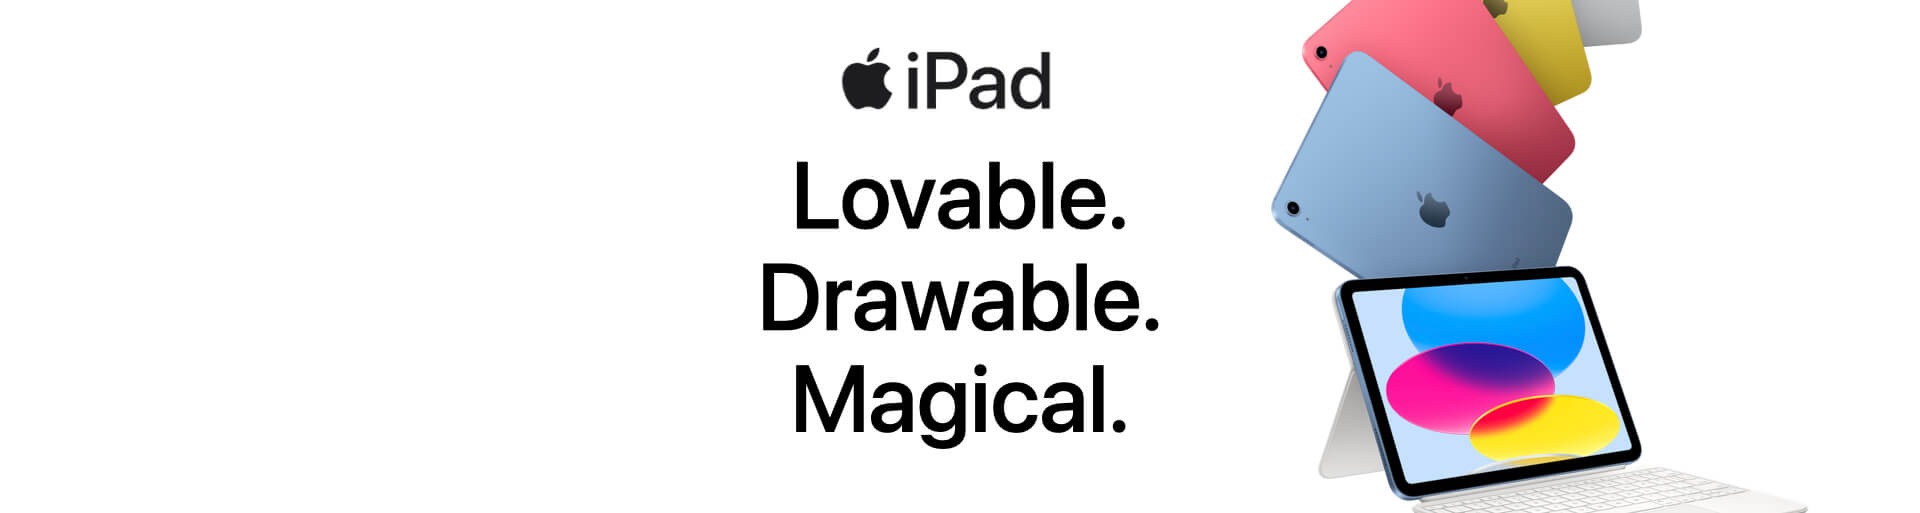 iPad. Lovable. Drawable. Magical.